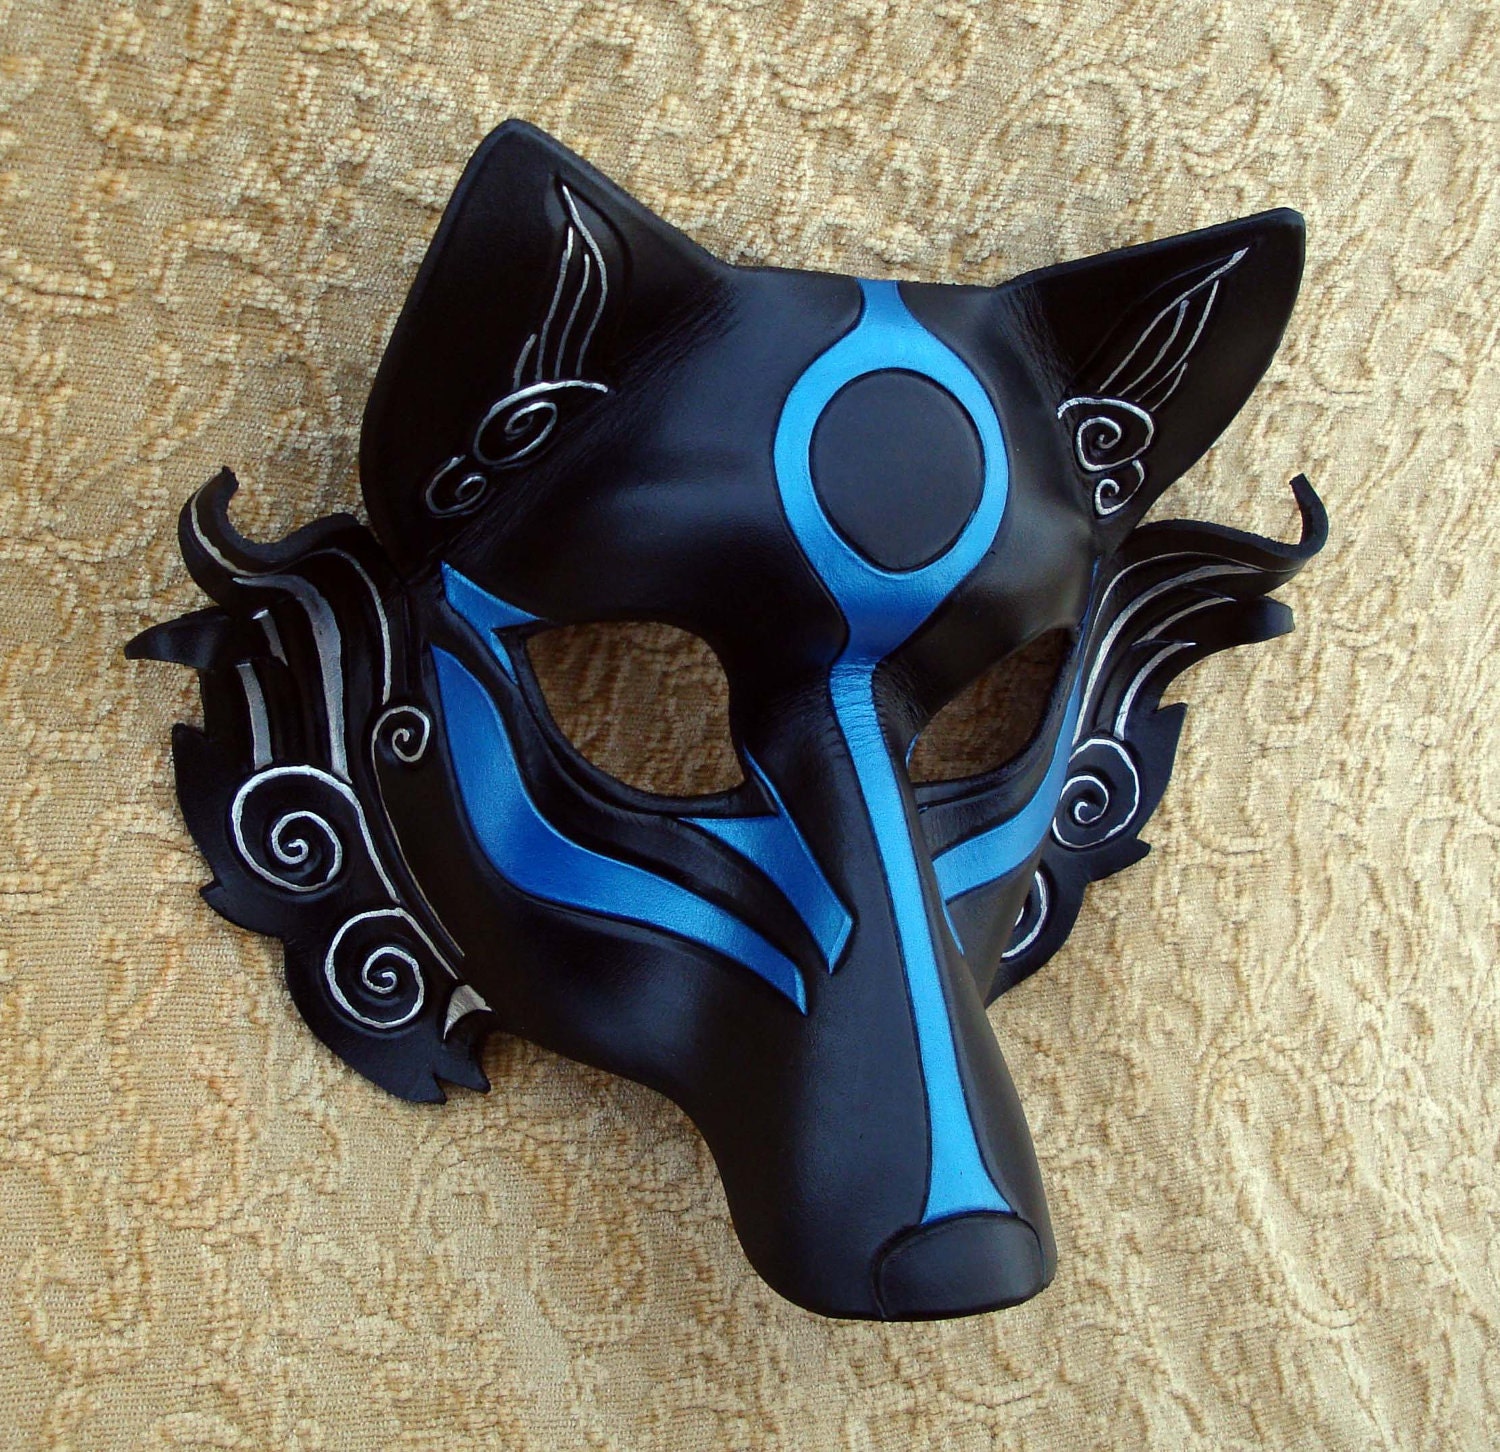 Black Okami leather mask ...handmade Japanese wolf mask in